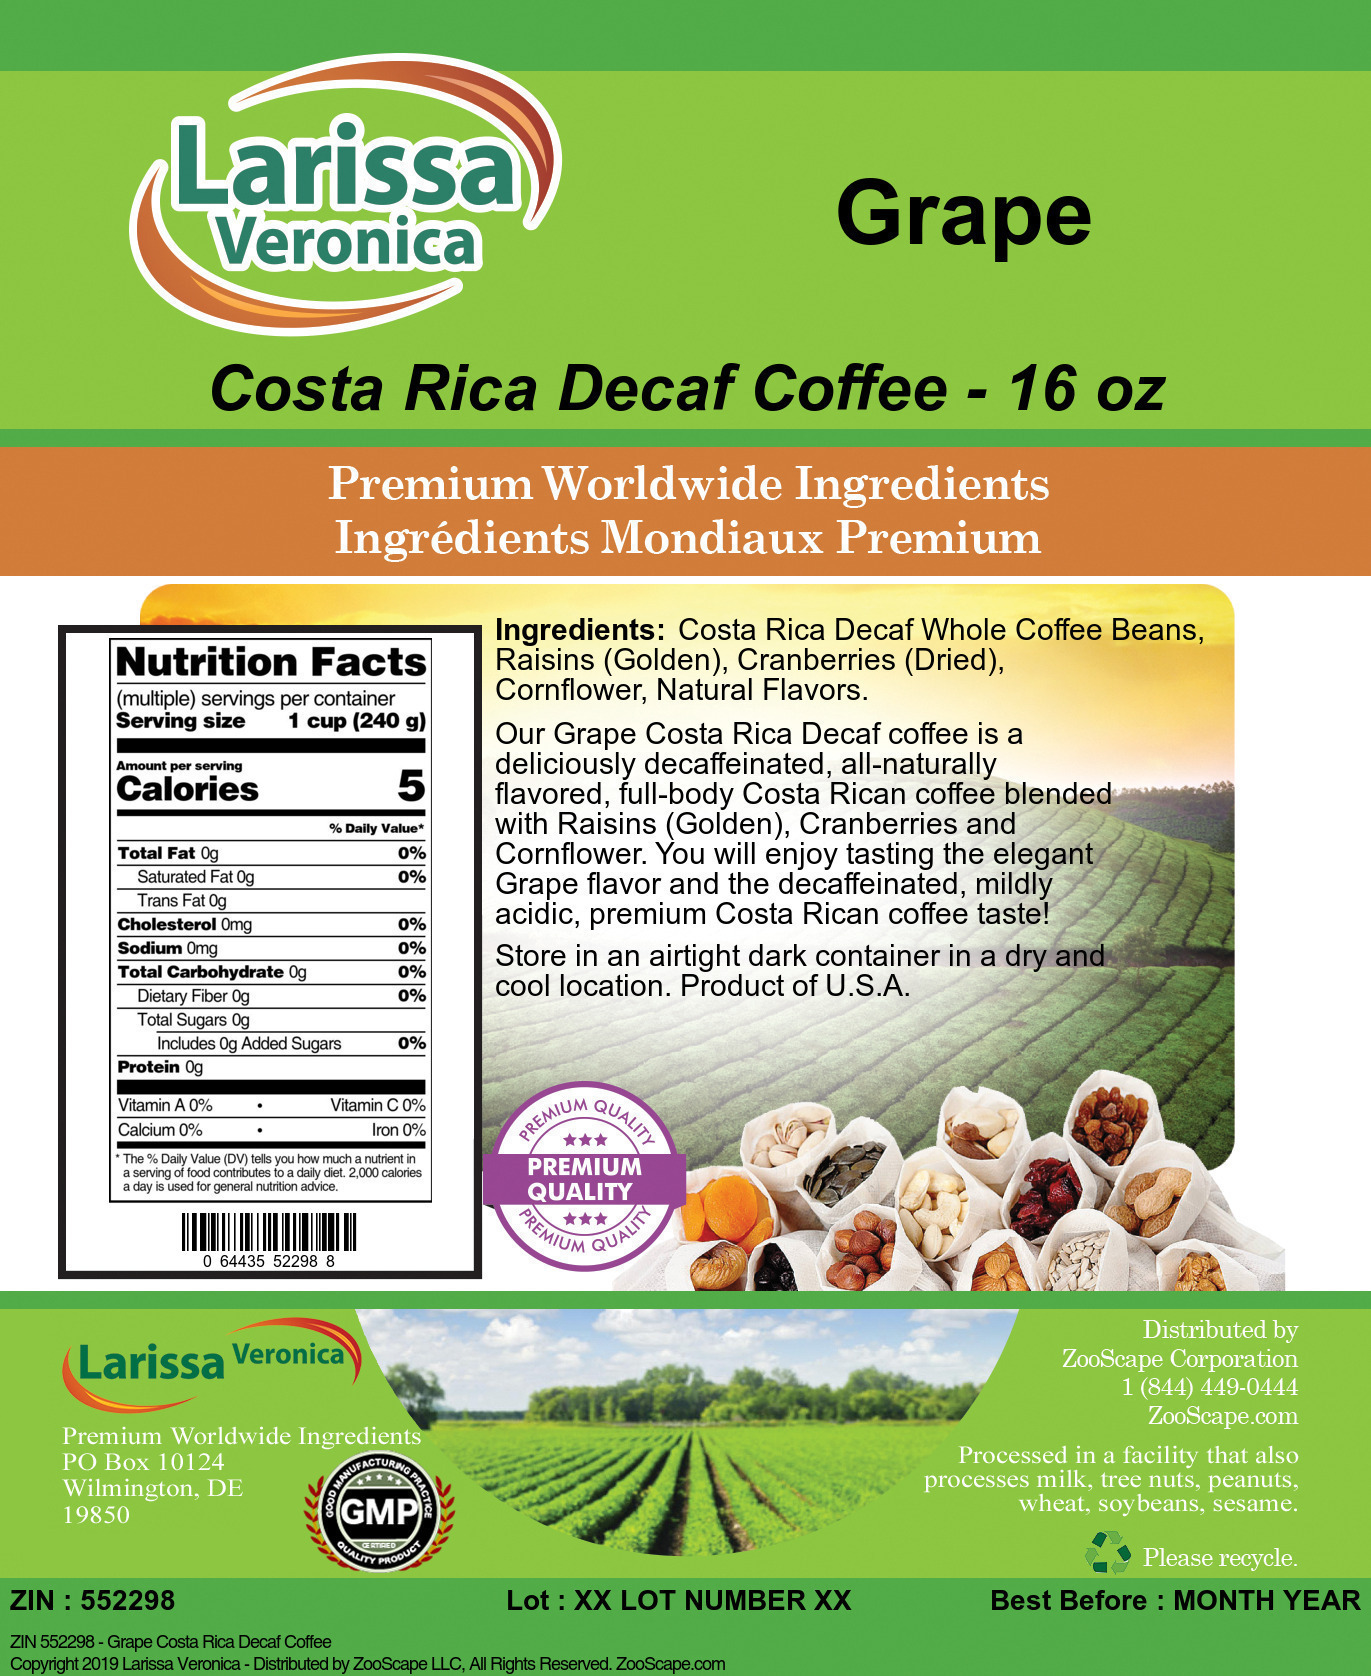 Grape Costa Rica Decaf Coffee - Label